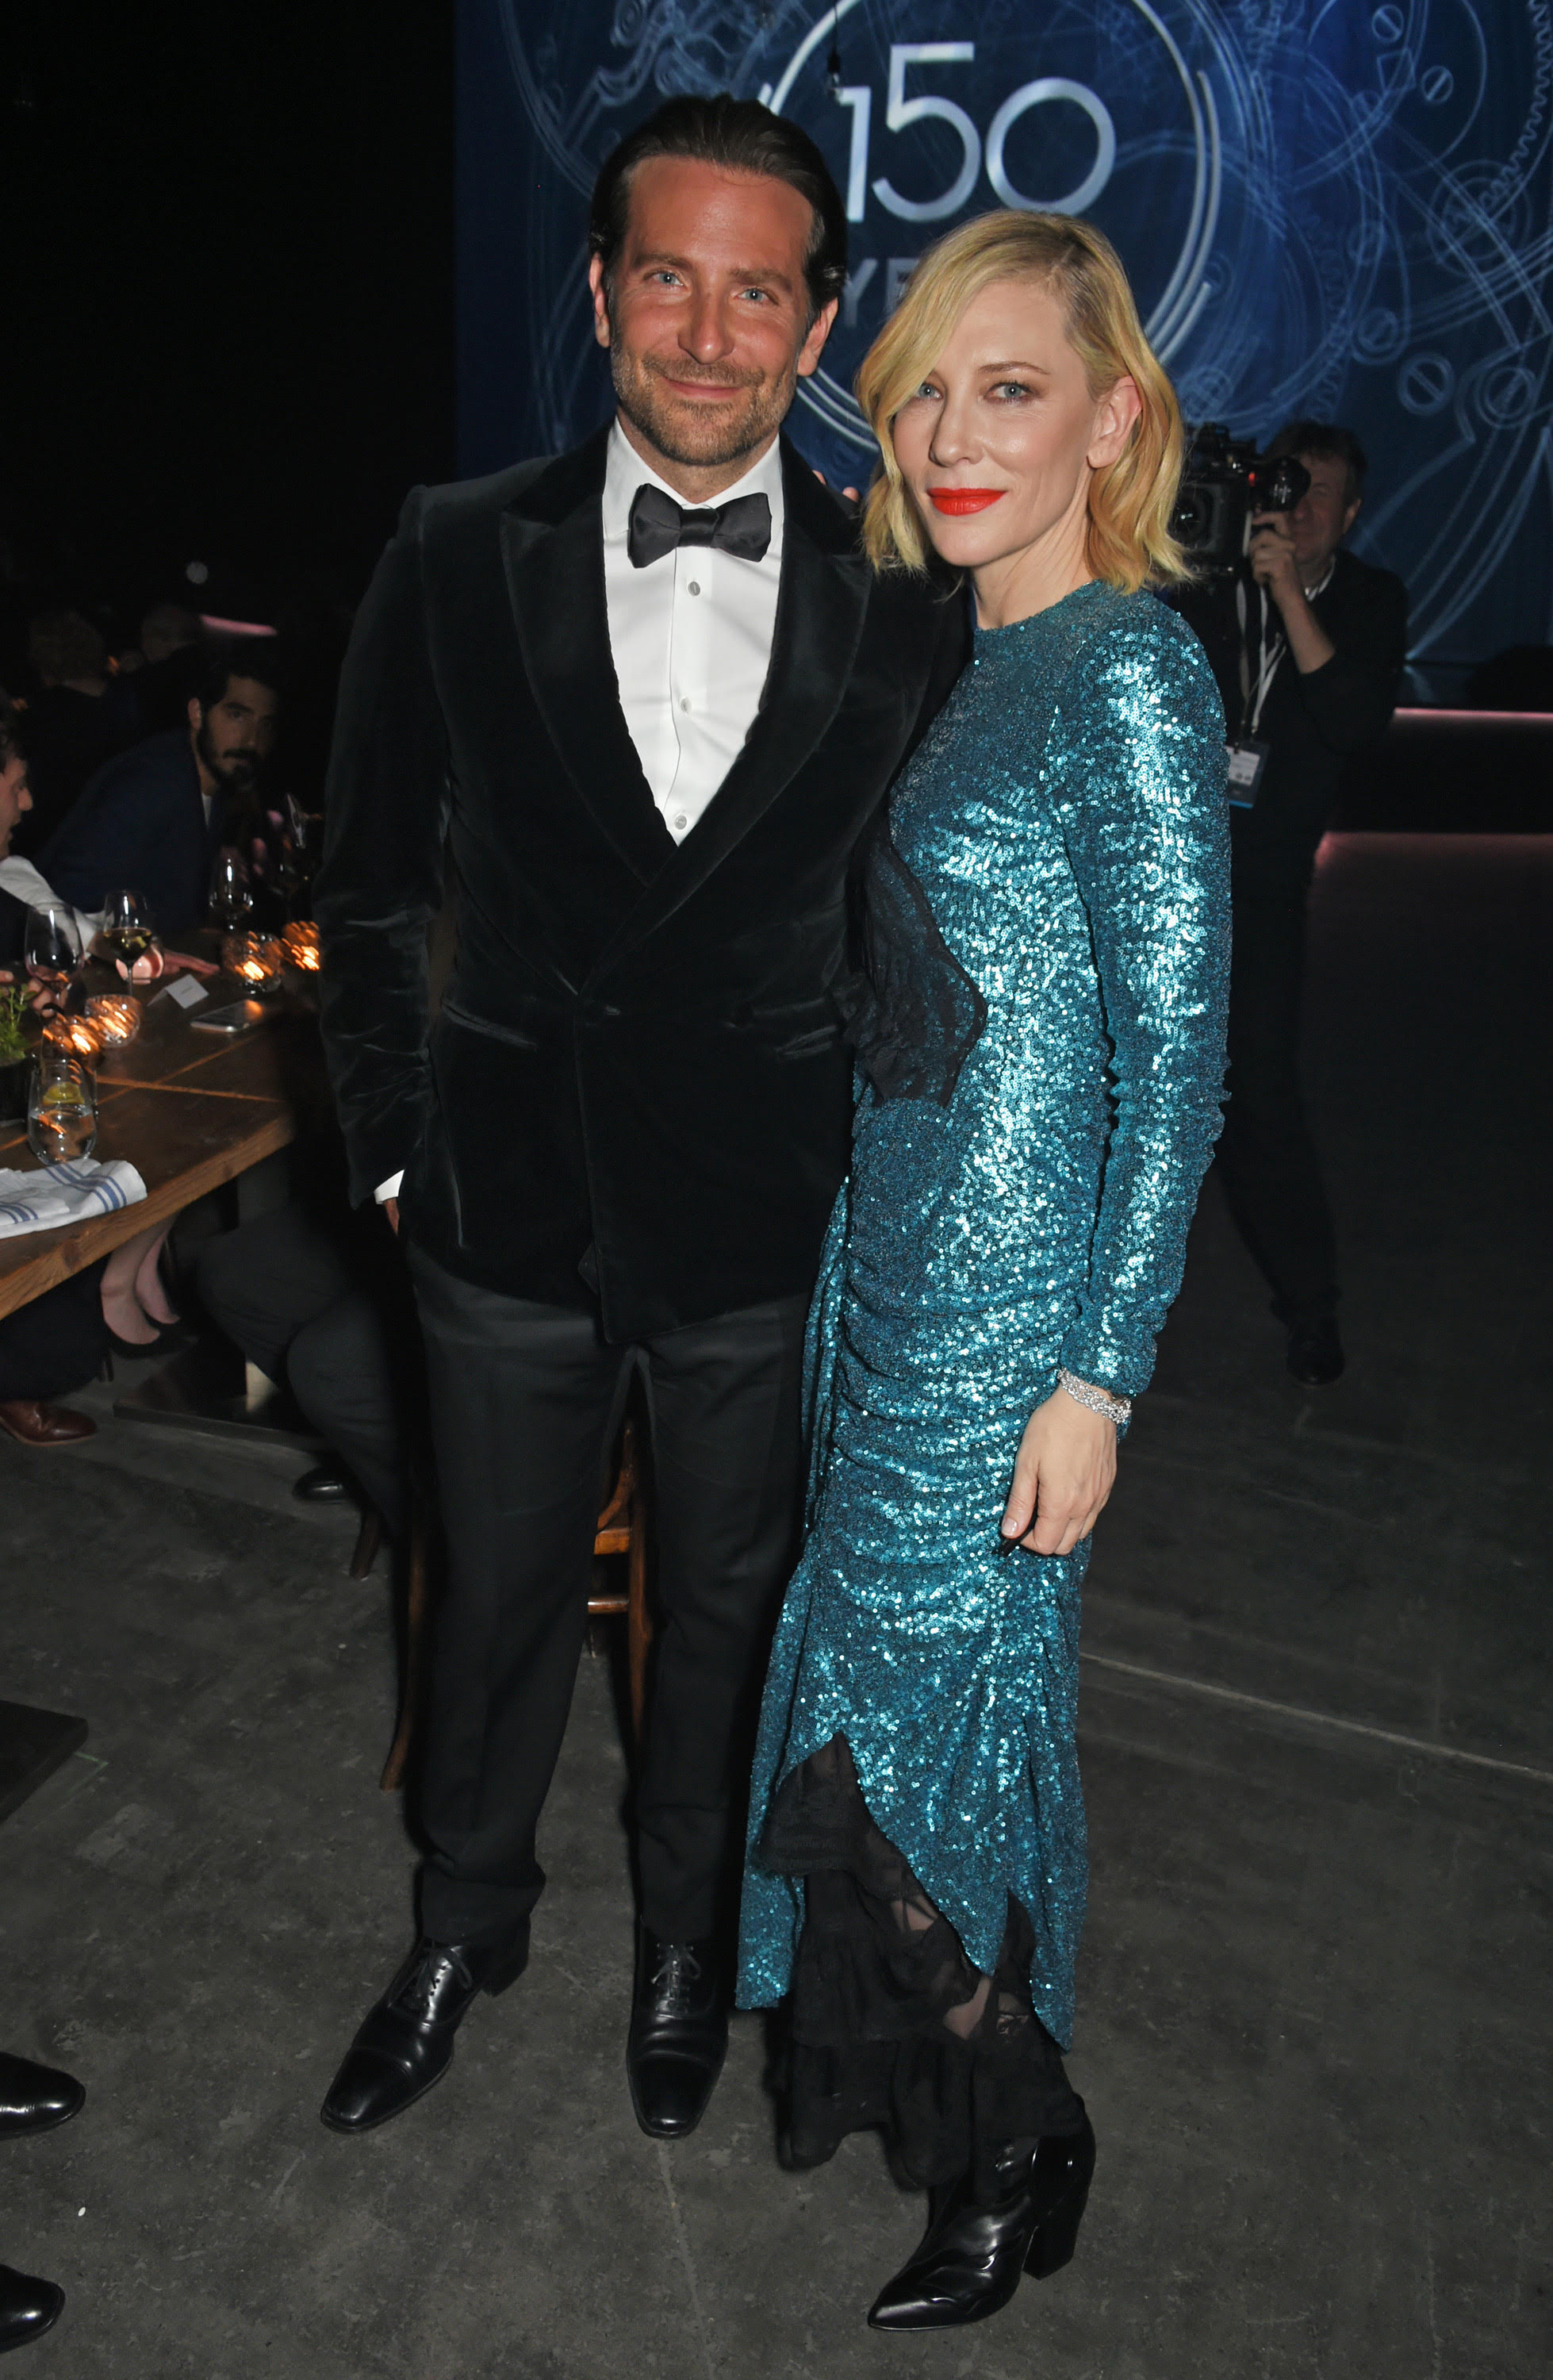 Bradley Cooper and Cate Blanchett